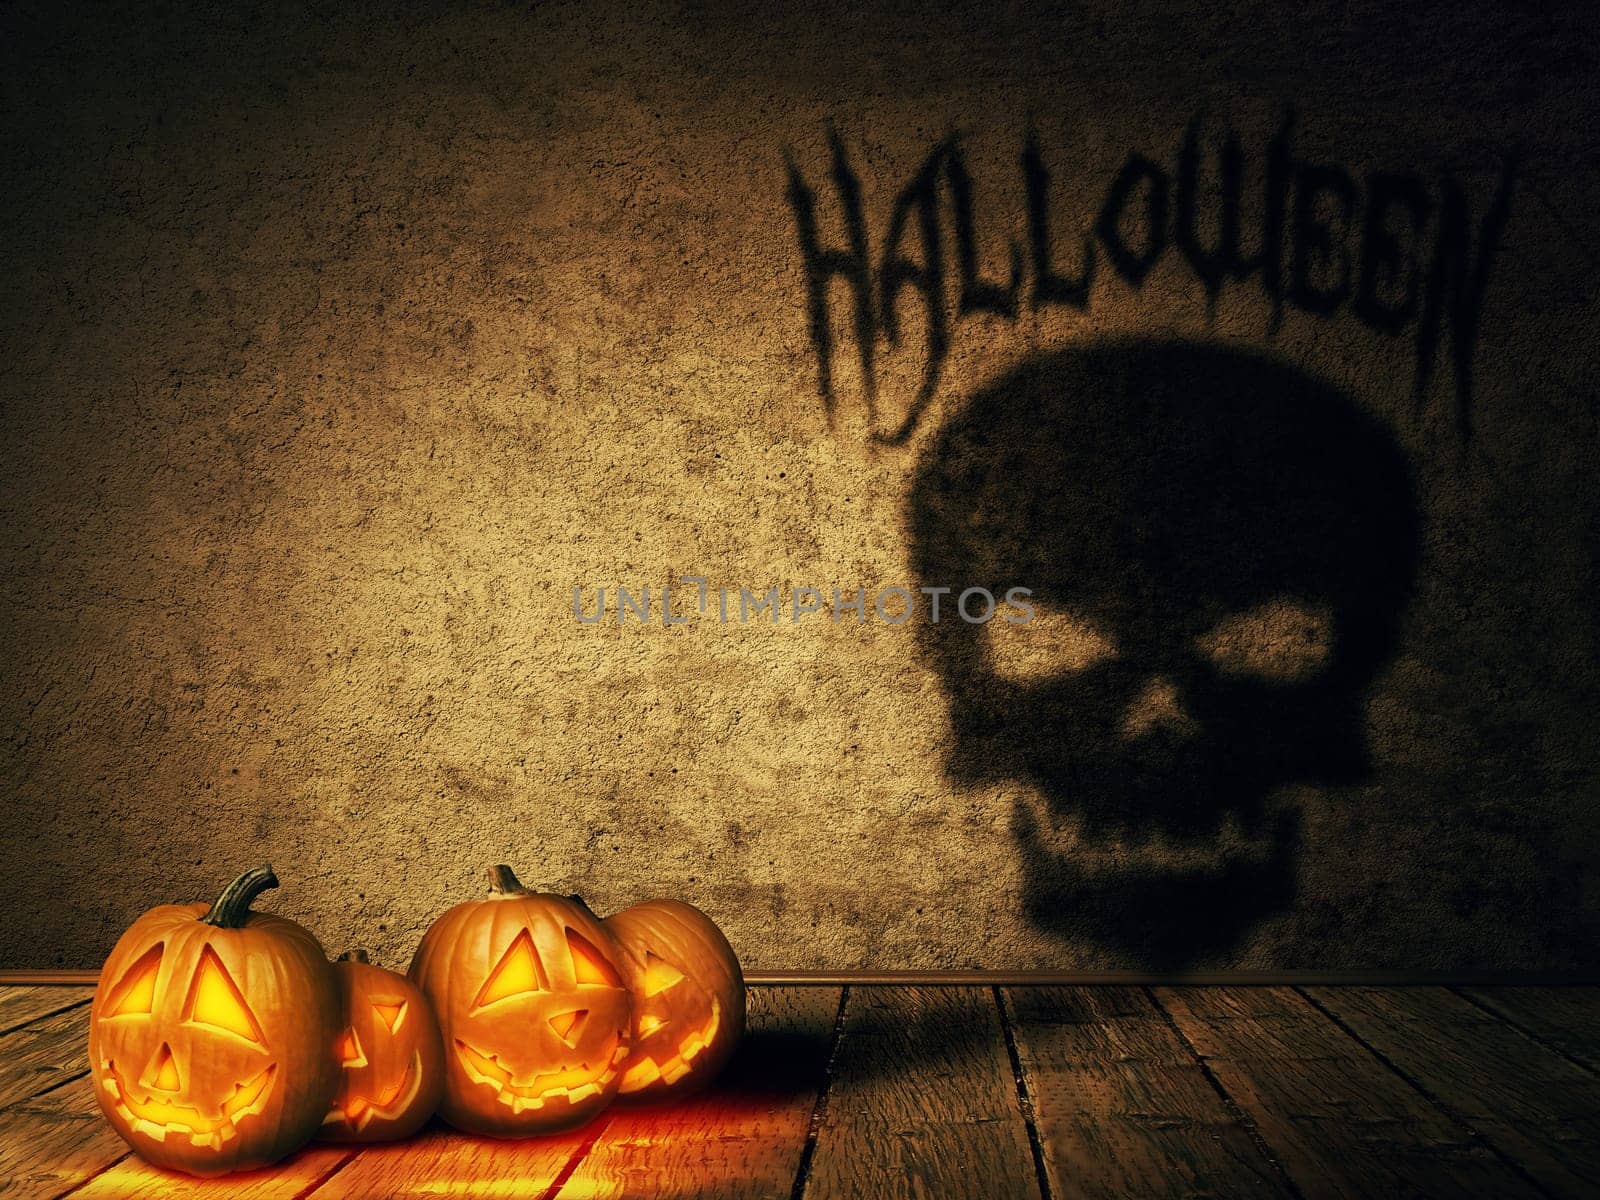 Lot of pumpkins, jack-o'-lantern casting a shadow shaped as a skull. Surreal Halloween celebration concept.
